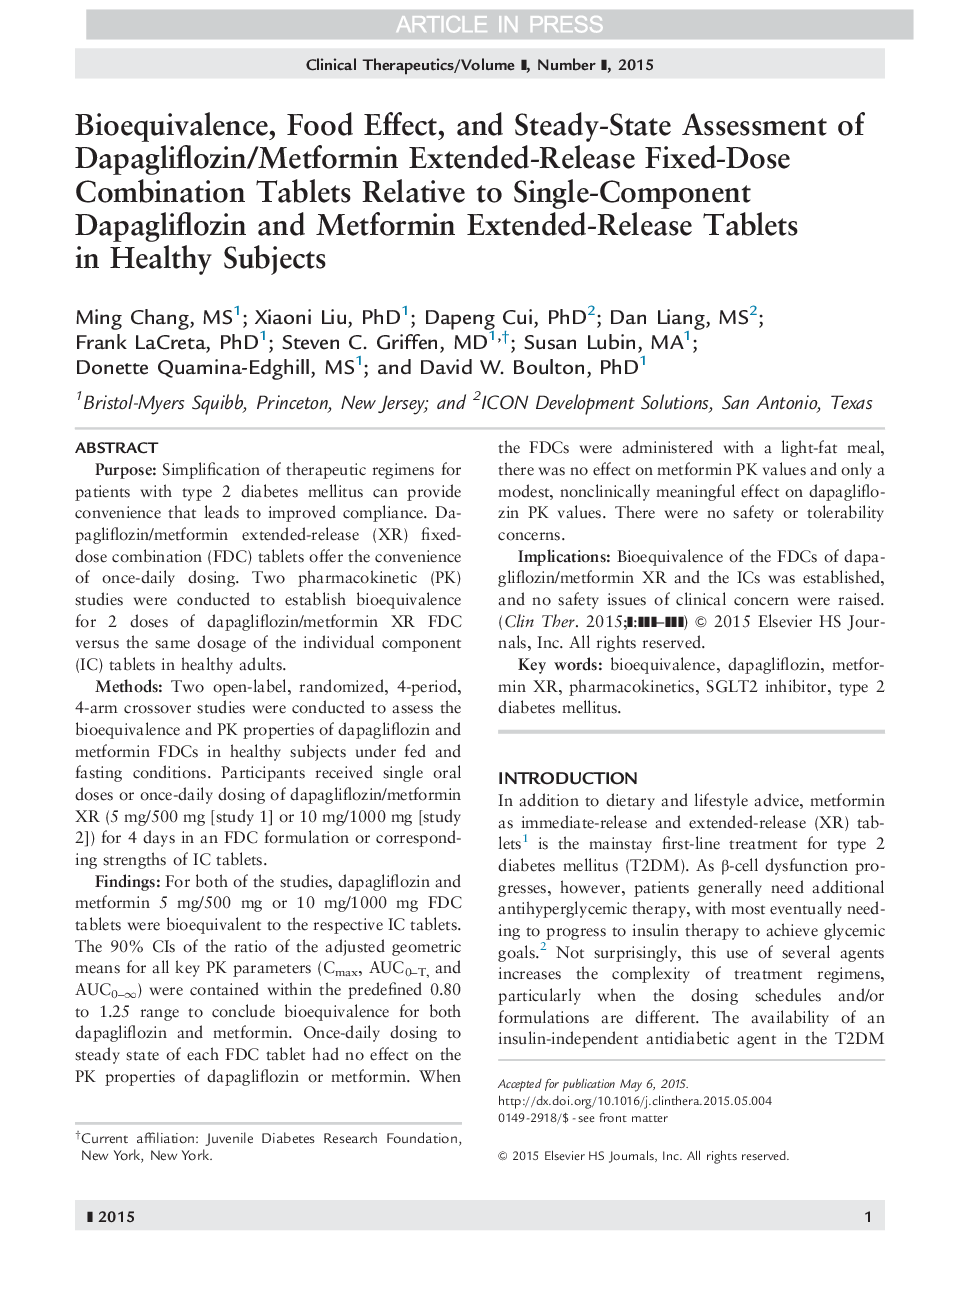 Bioequivalence, Food Effect, and SteadyâState Assessment of Dapagliflozin/Metformin Extendedârelease Fixedâdose Combination Tablets Relative to Singleâcomponent Dapagliflozin and Metformin Extendedârelease Tablets in Healthy Subjects